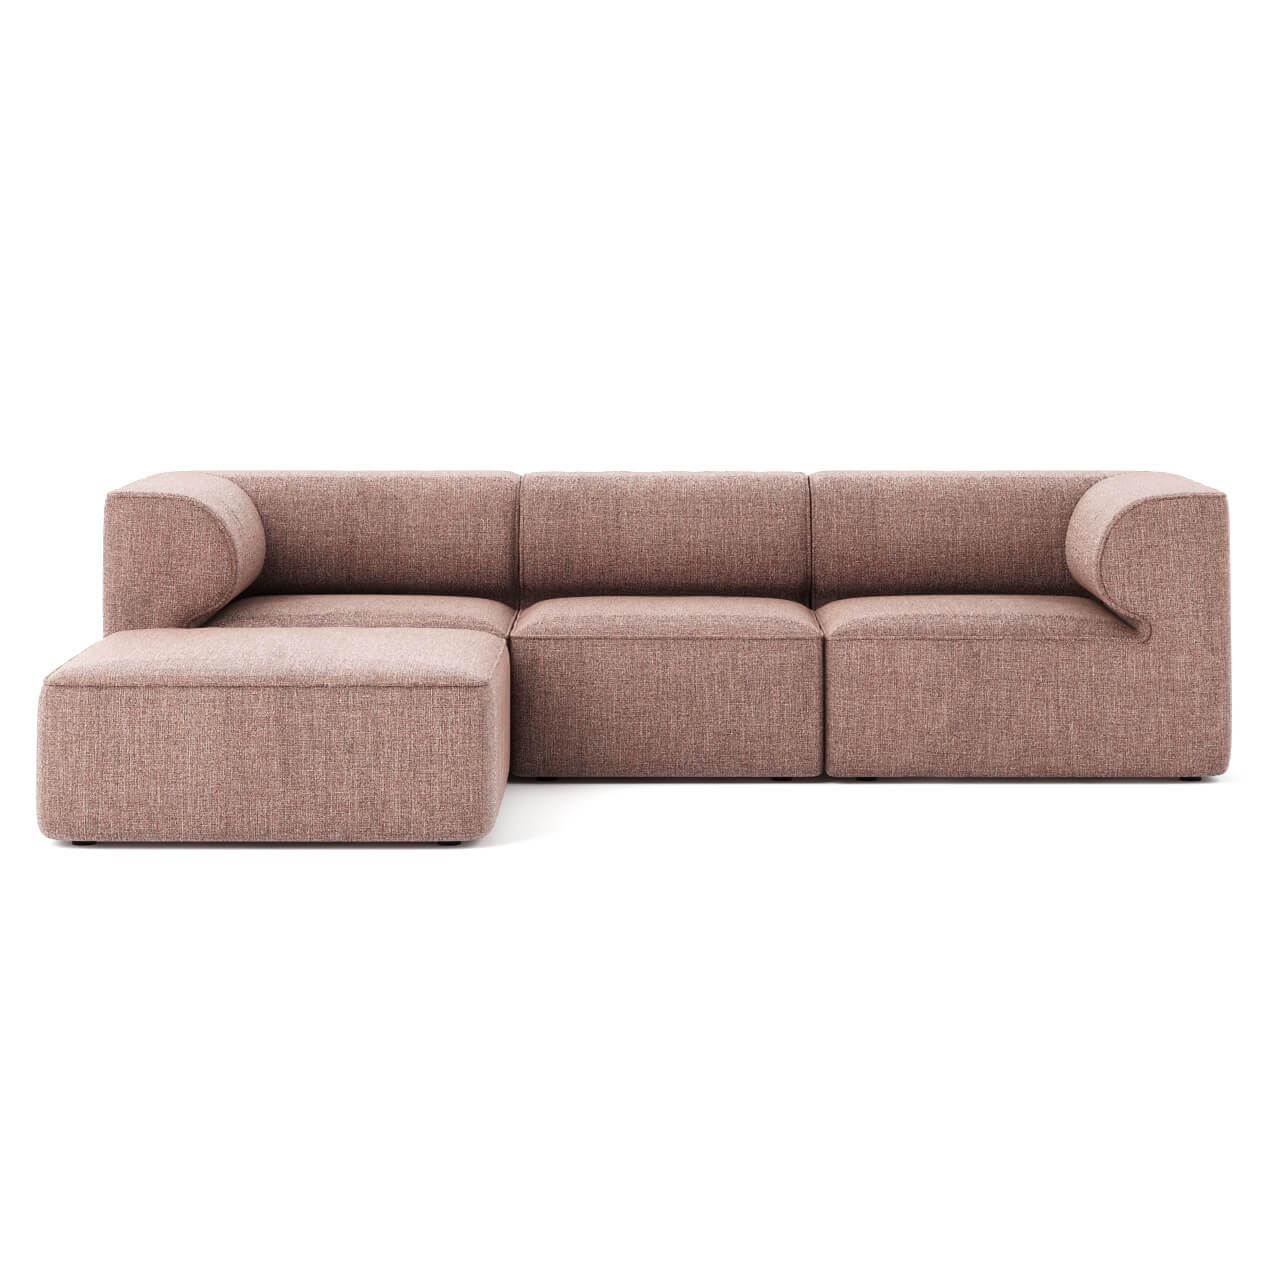 Menu暗粉色柔软布艺组合沙发3D模型（OBJ,FBX,MAX）